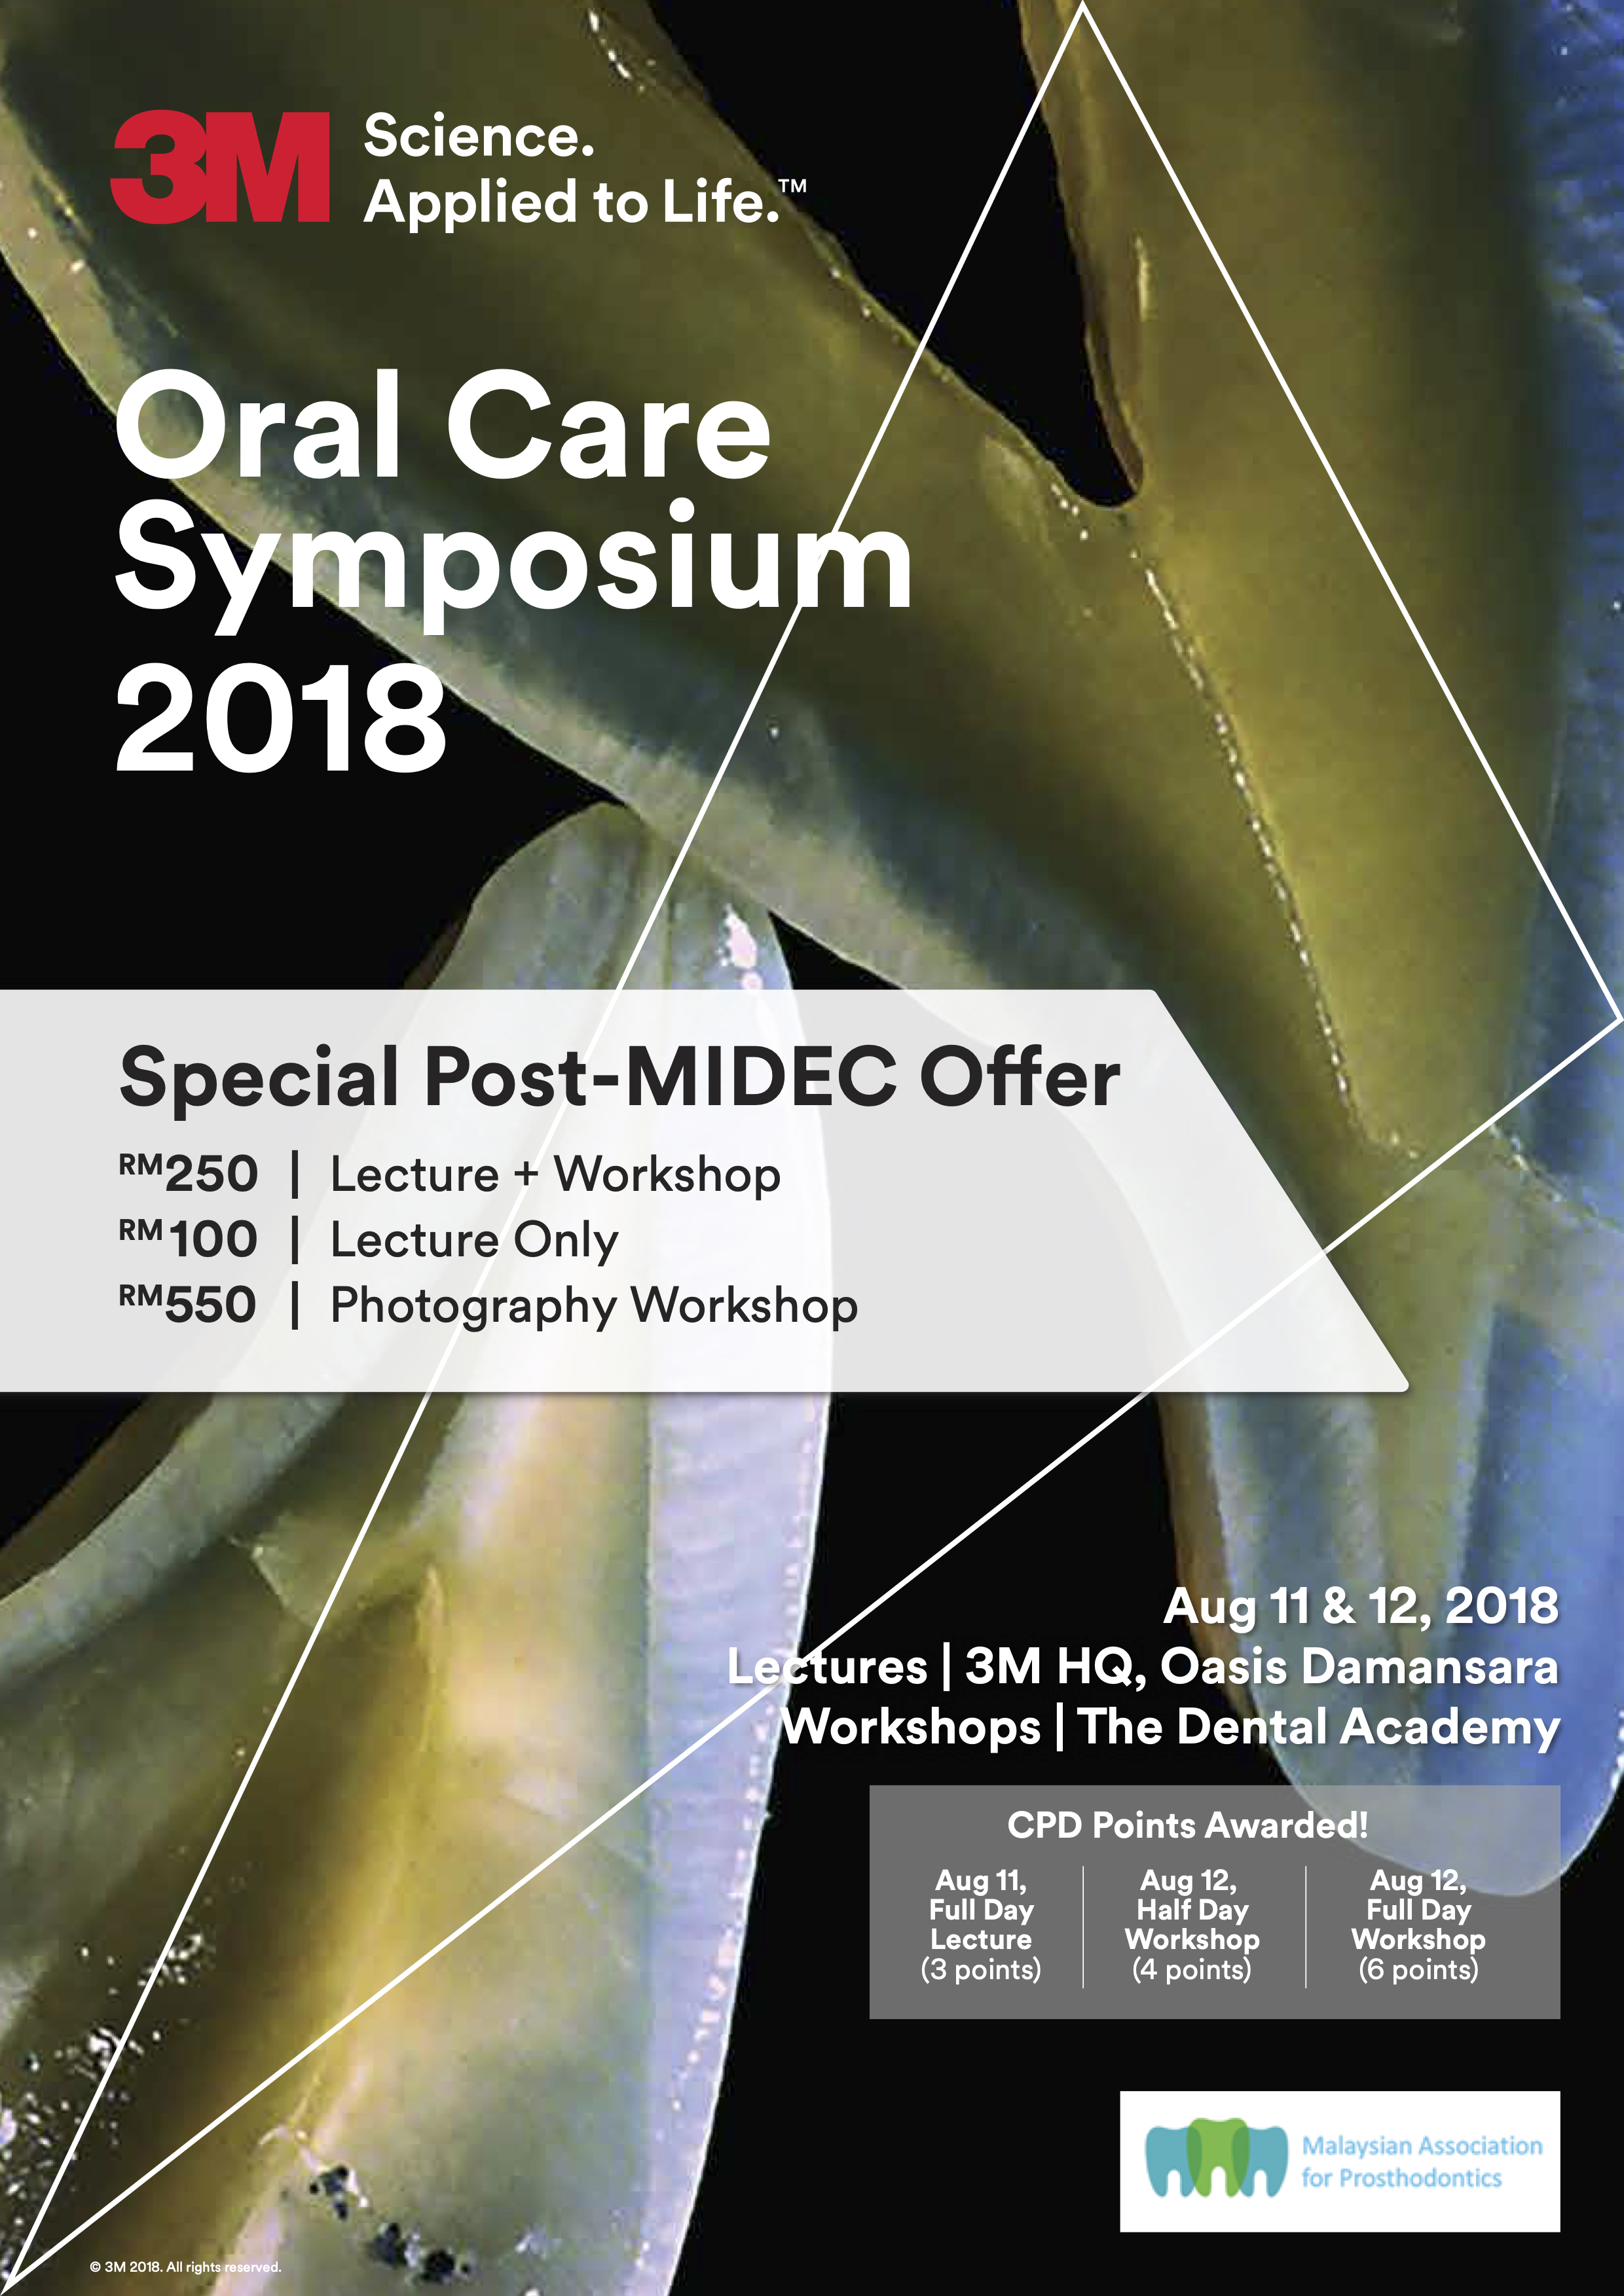 33M OralCare Symposium Leaflet 27July2018 final